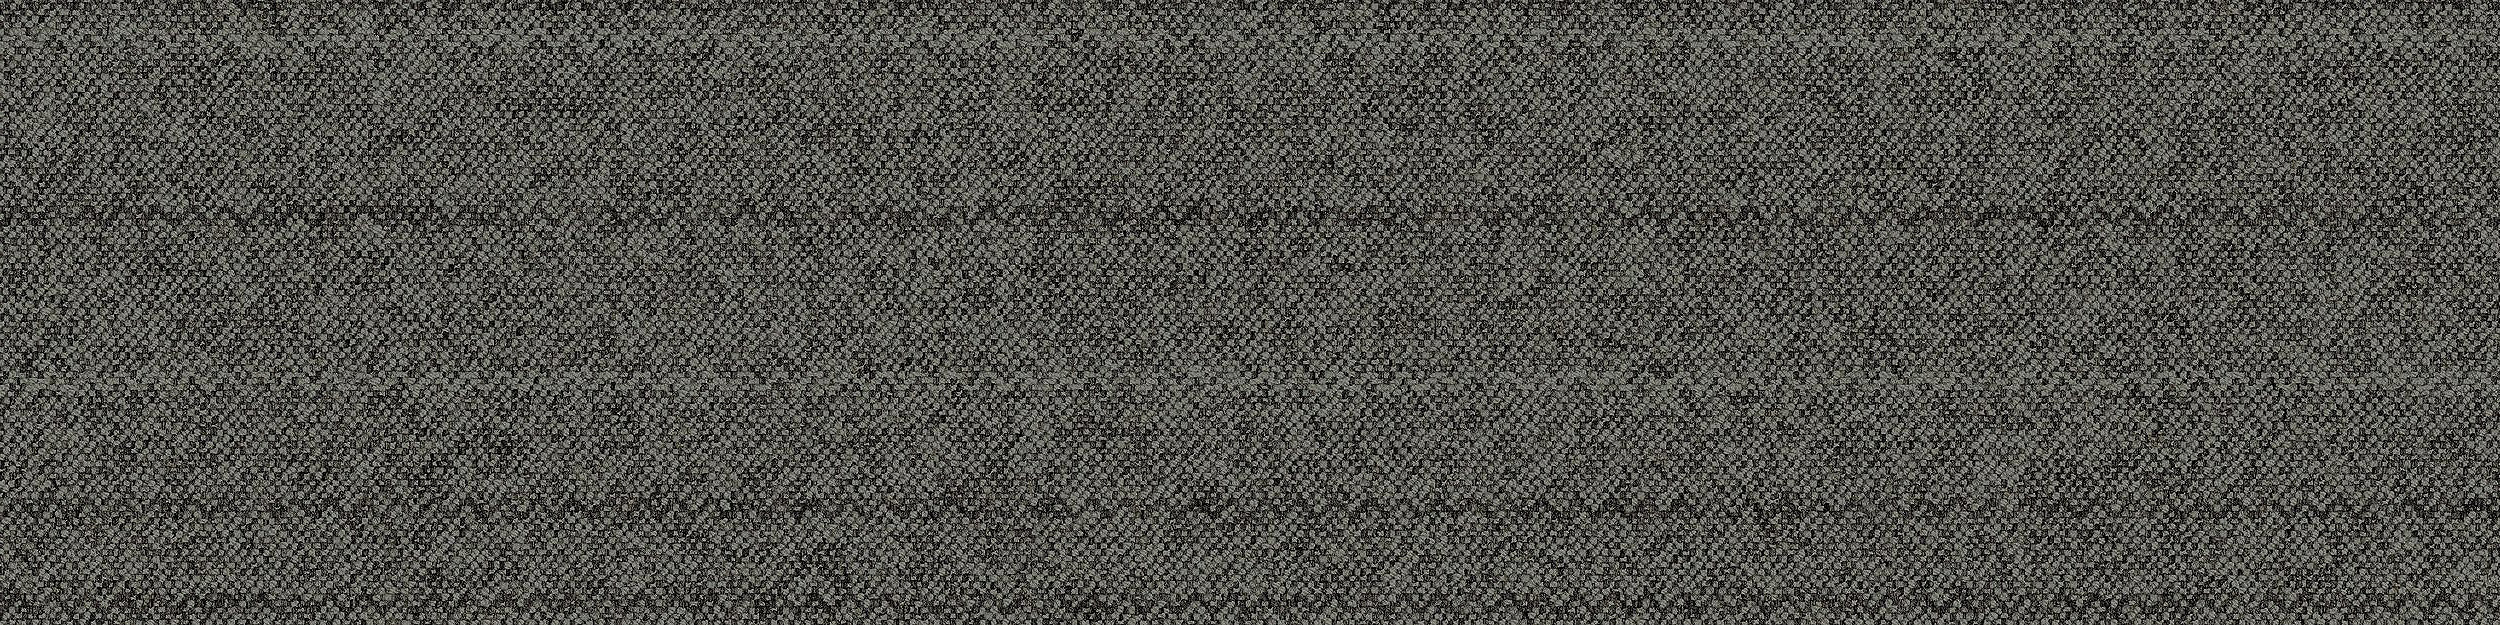 Plain Stitch Carpet Tile In Nickel Plain image number 5